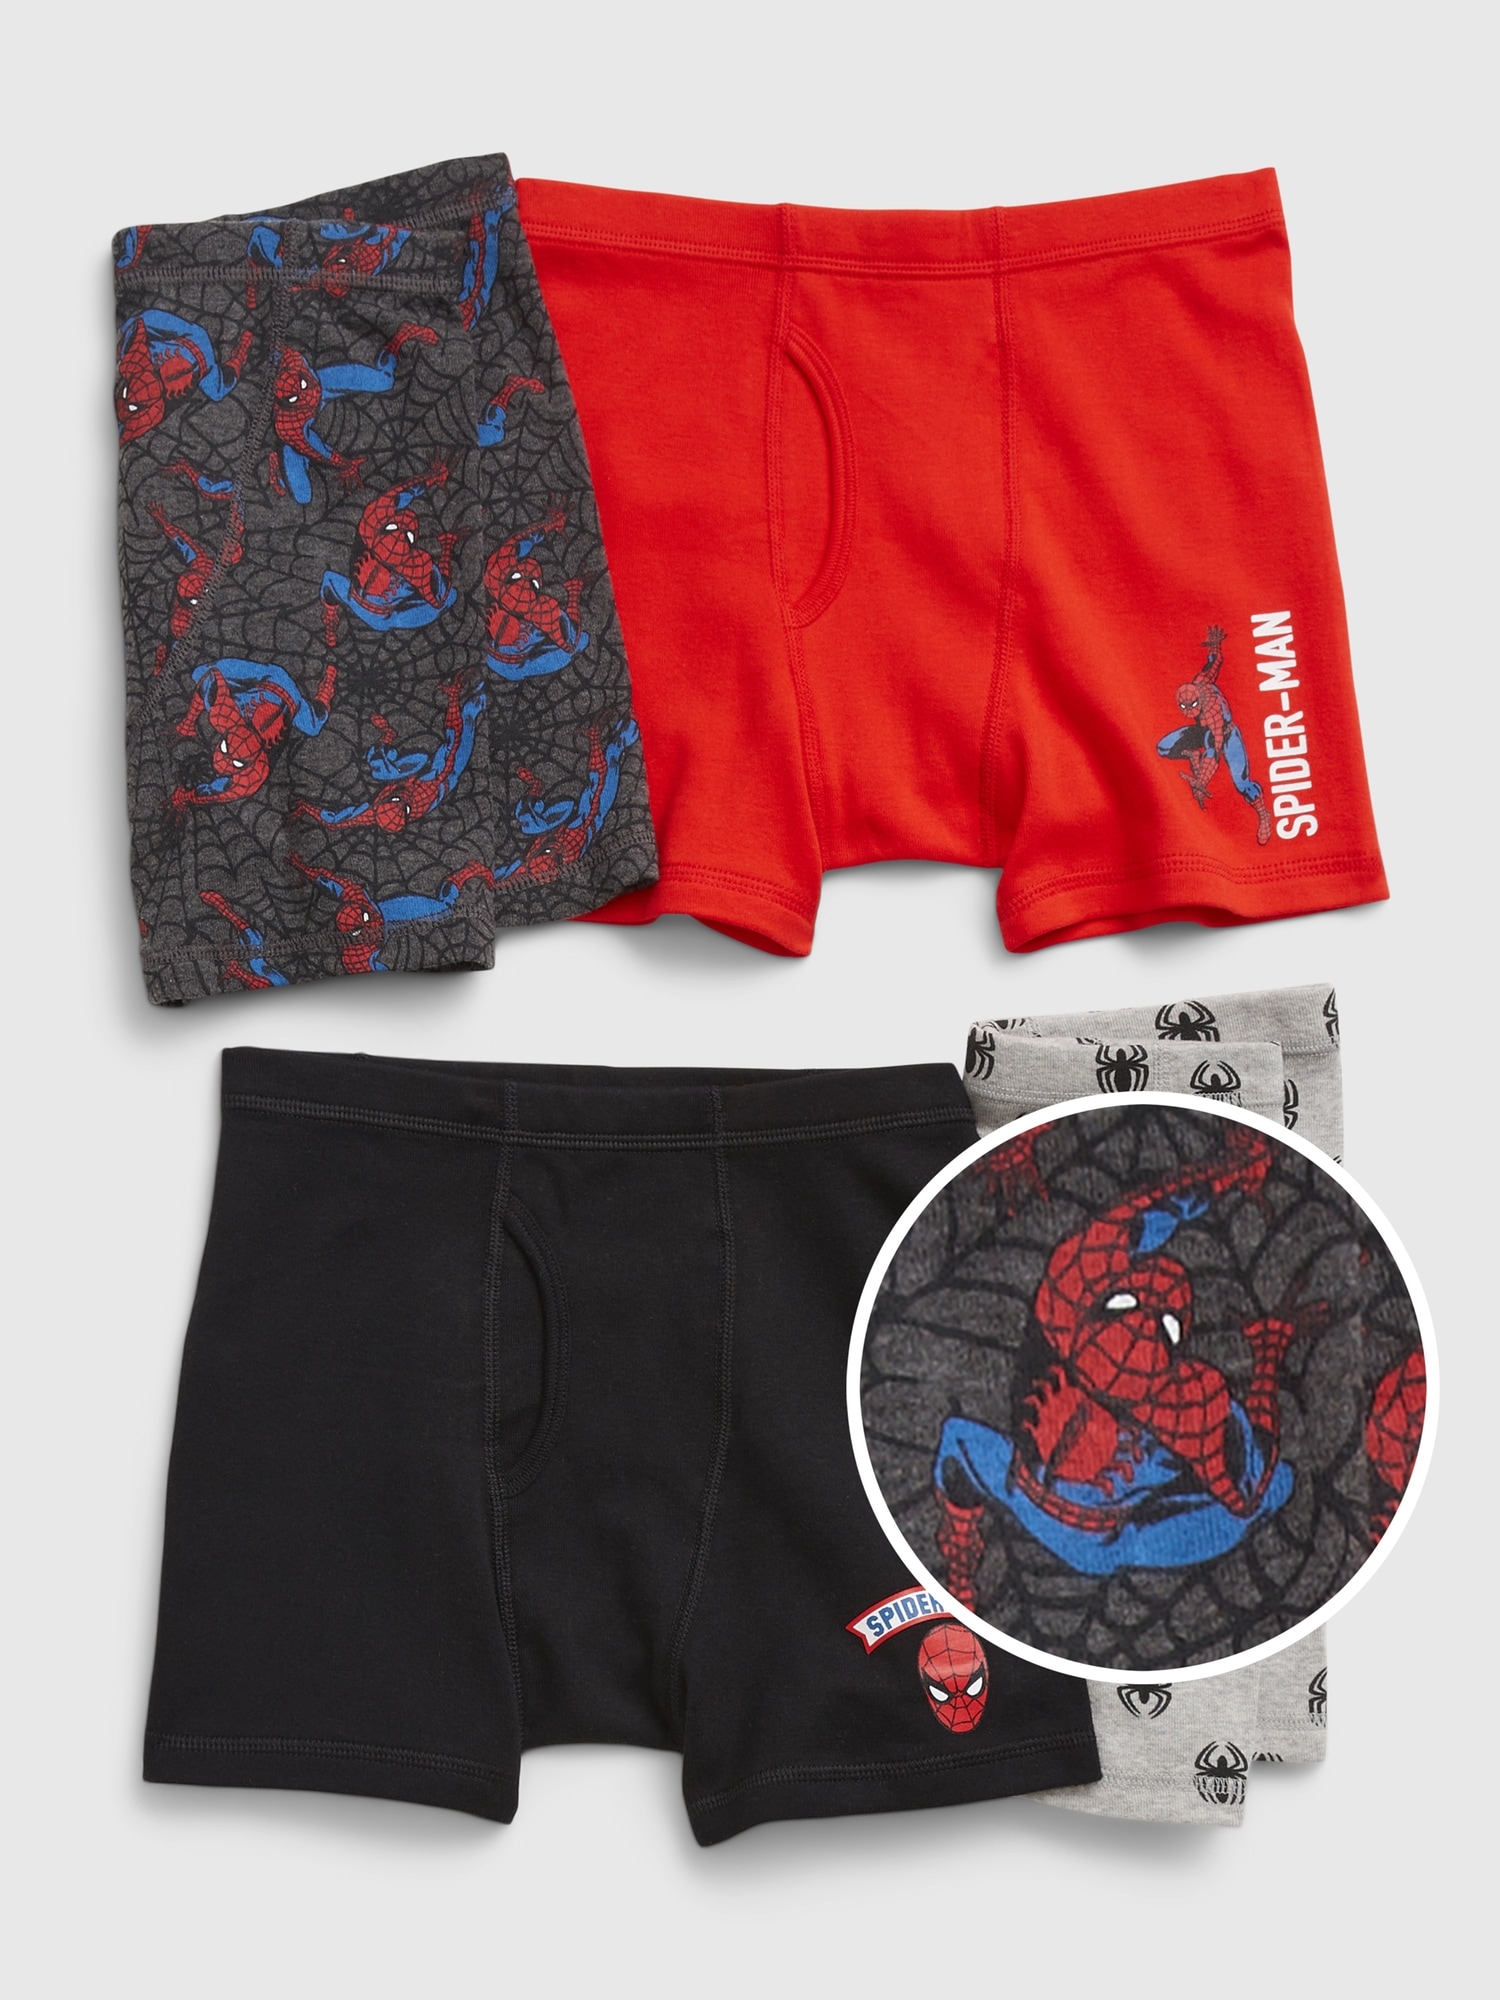 Spiderman Underwear Boys Sizes XS4 S6 M8 L10 Boxer Briefs Wicking 3 Pack NEW